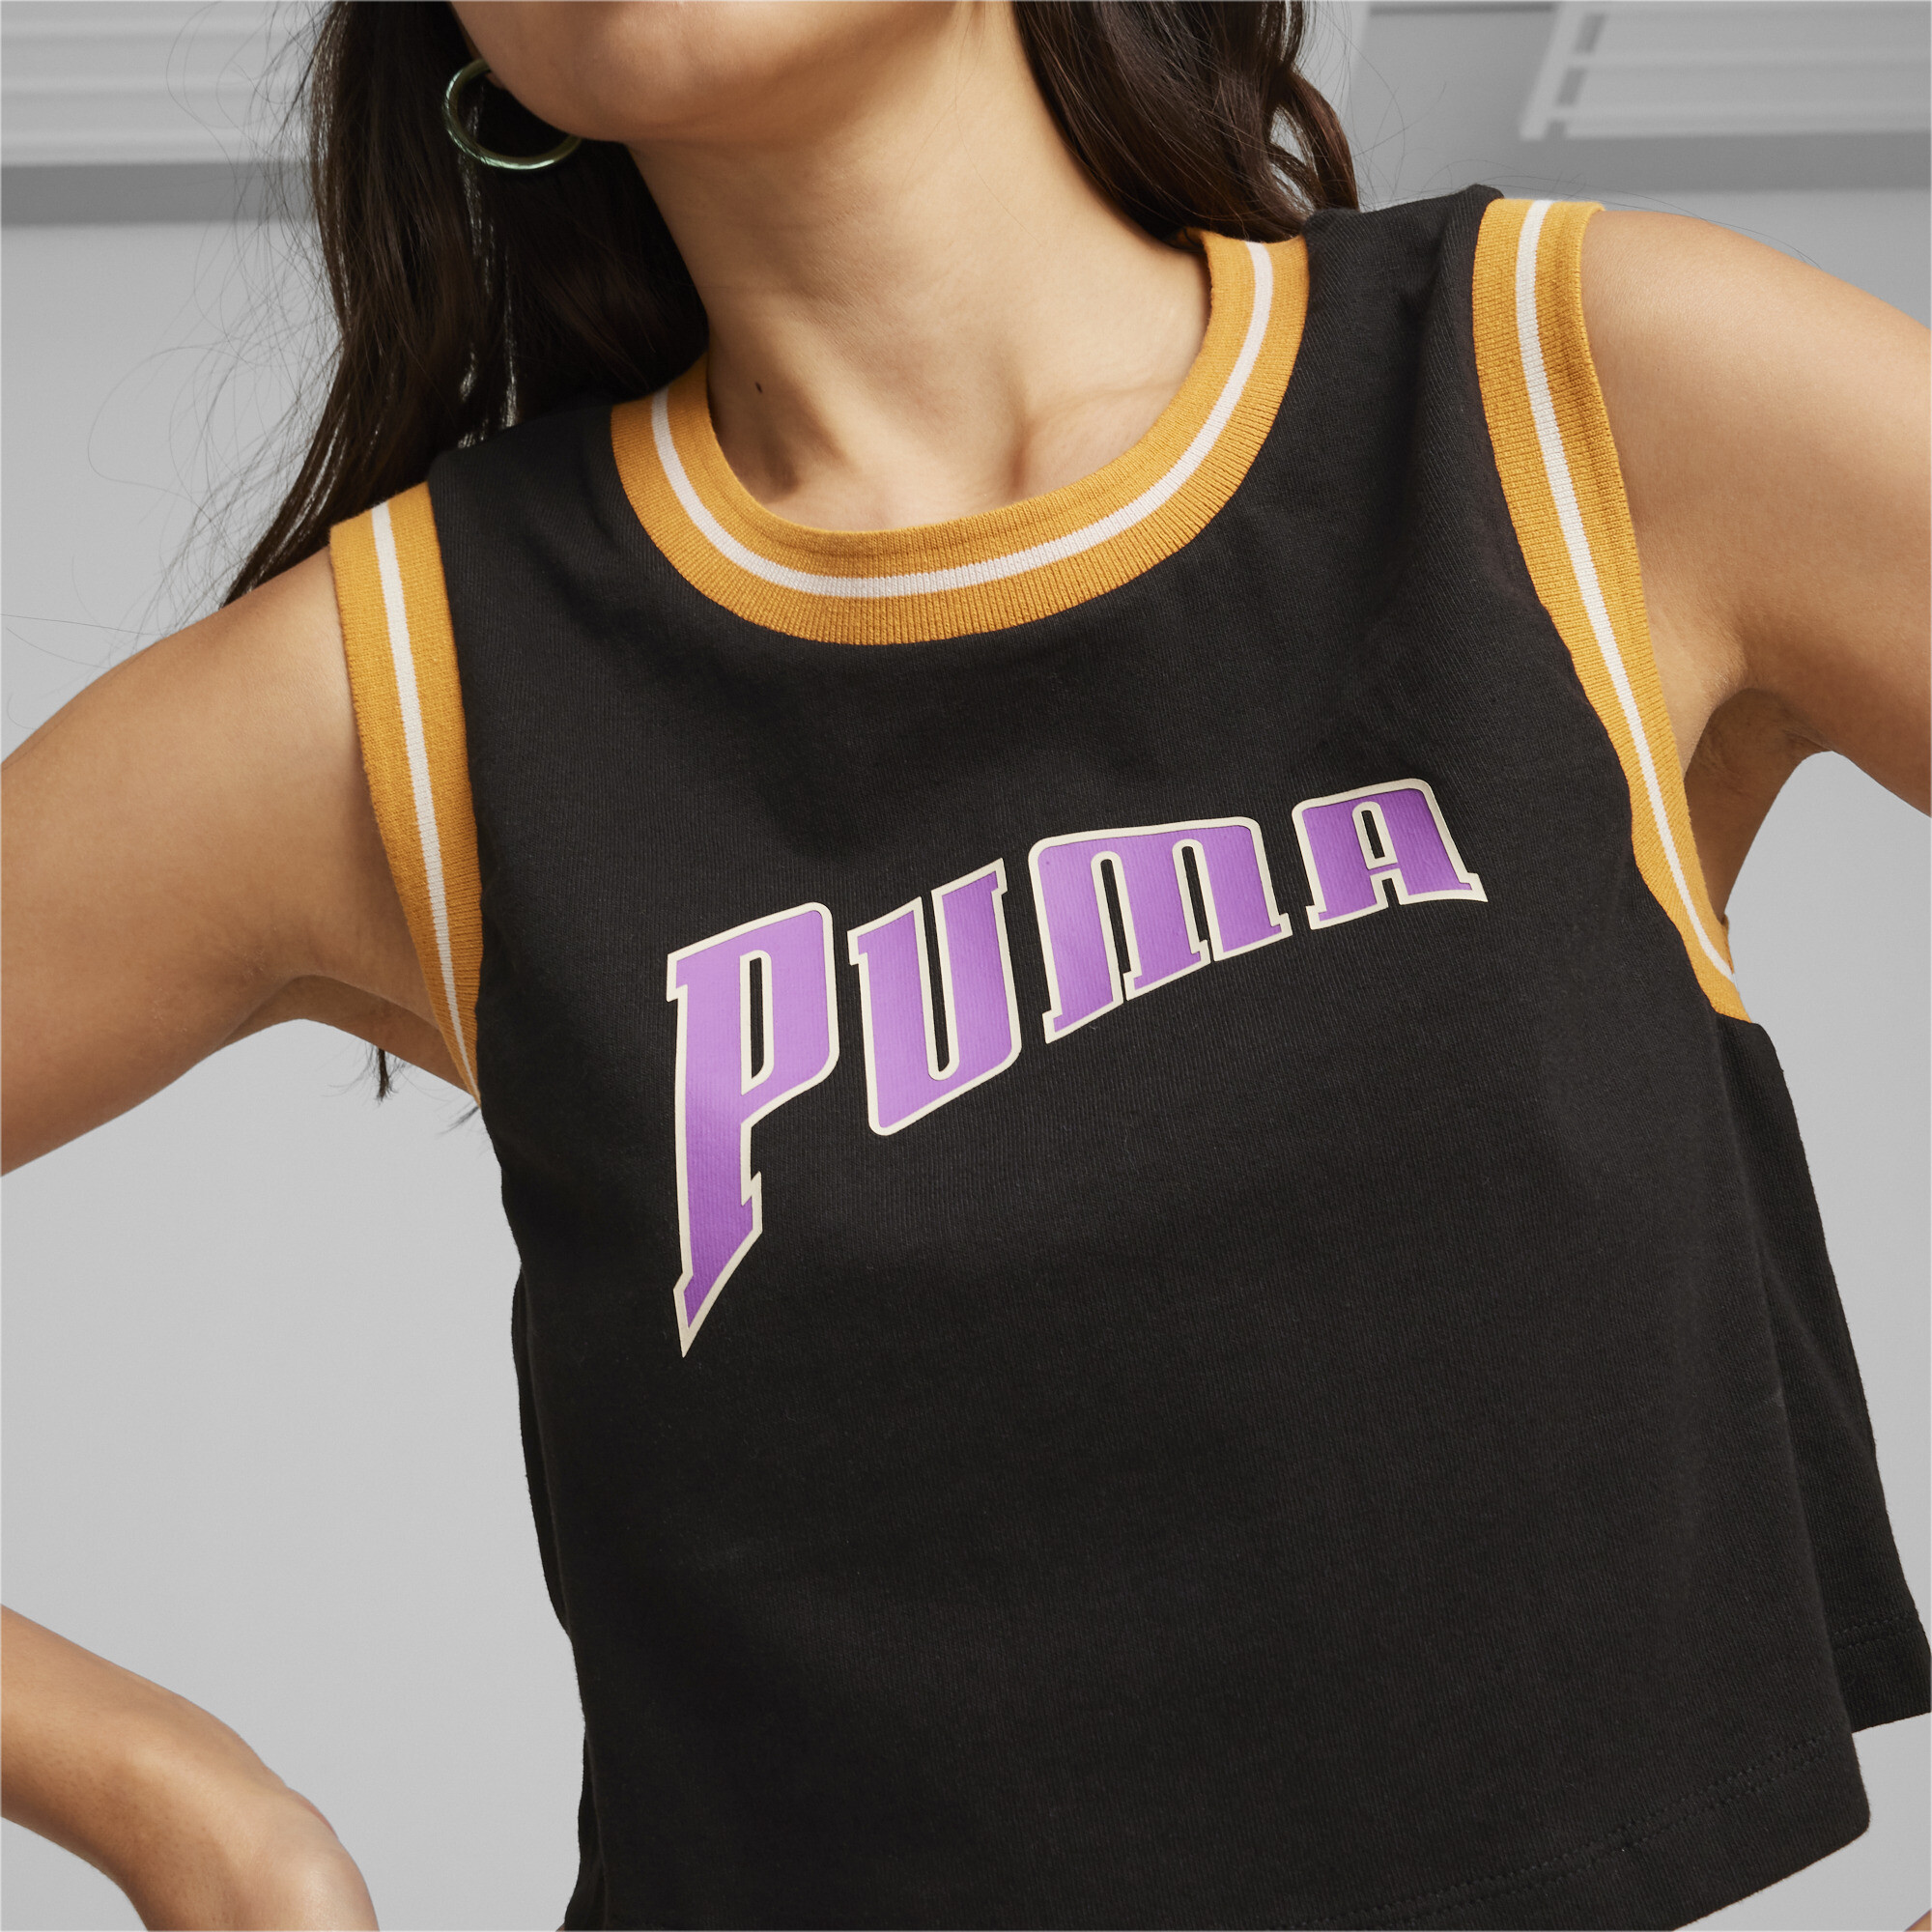 Women's PUMA TEAM Graphic Crop Top In Black, Size Medium